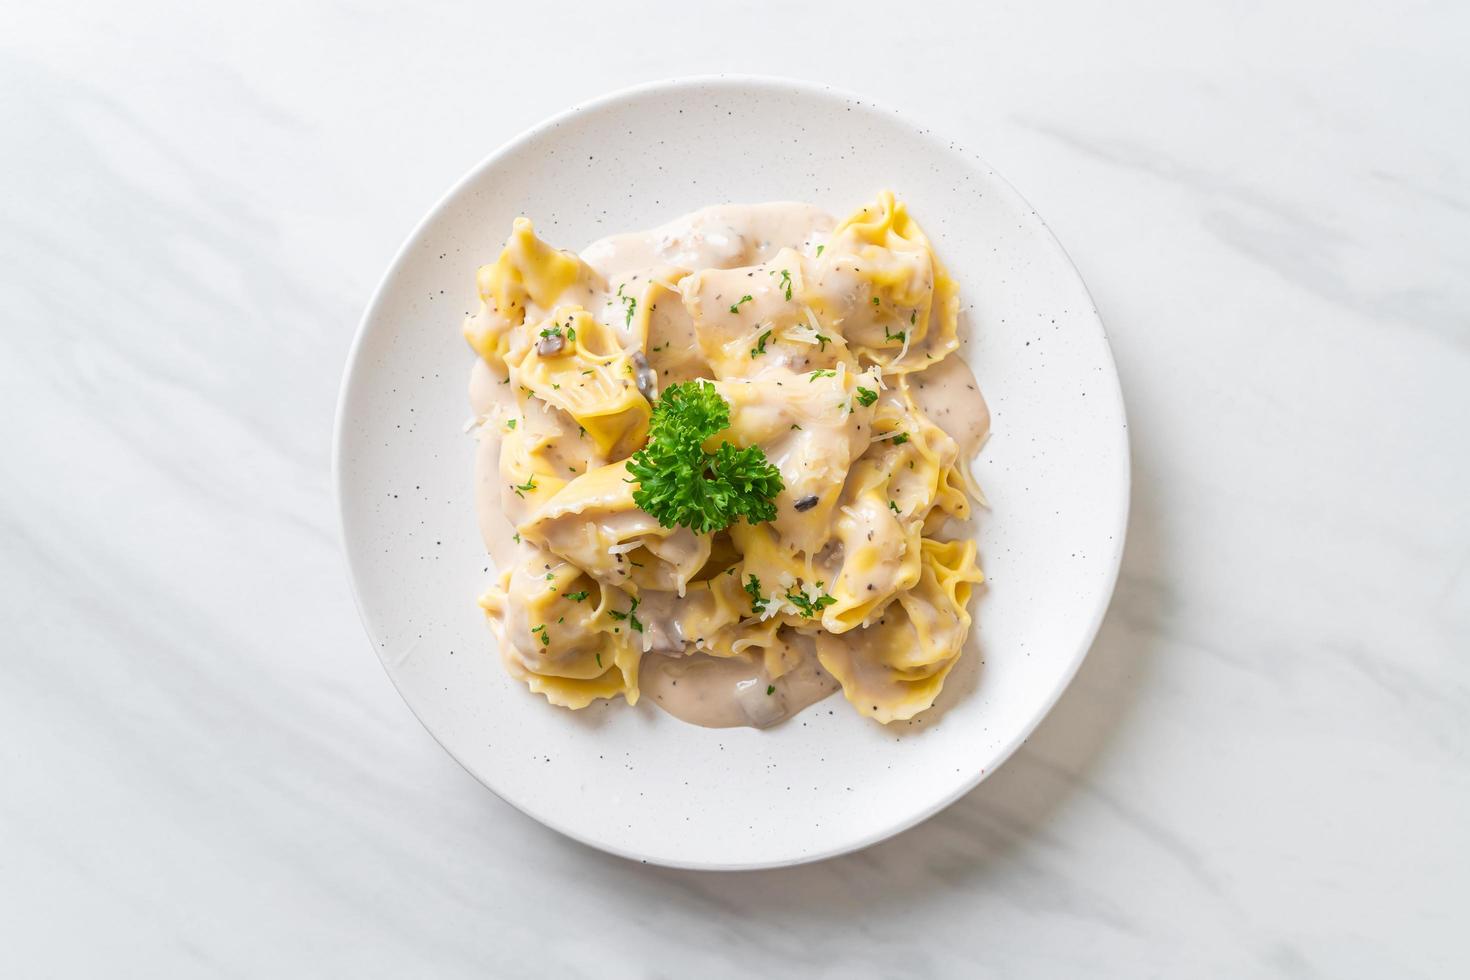 Tortellini pasta with mushroom cream sauce and cheese - Italian food style photo